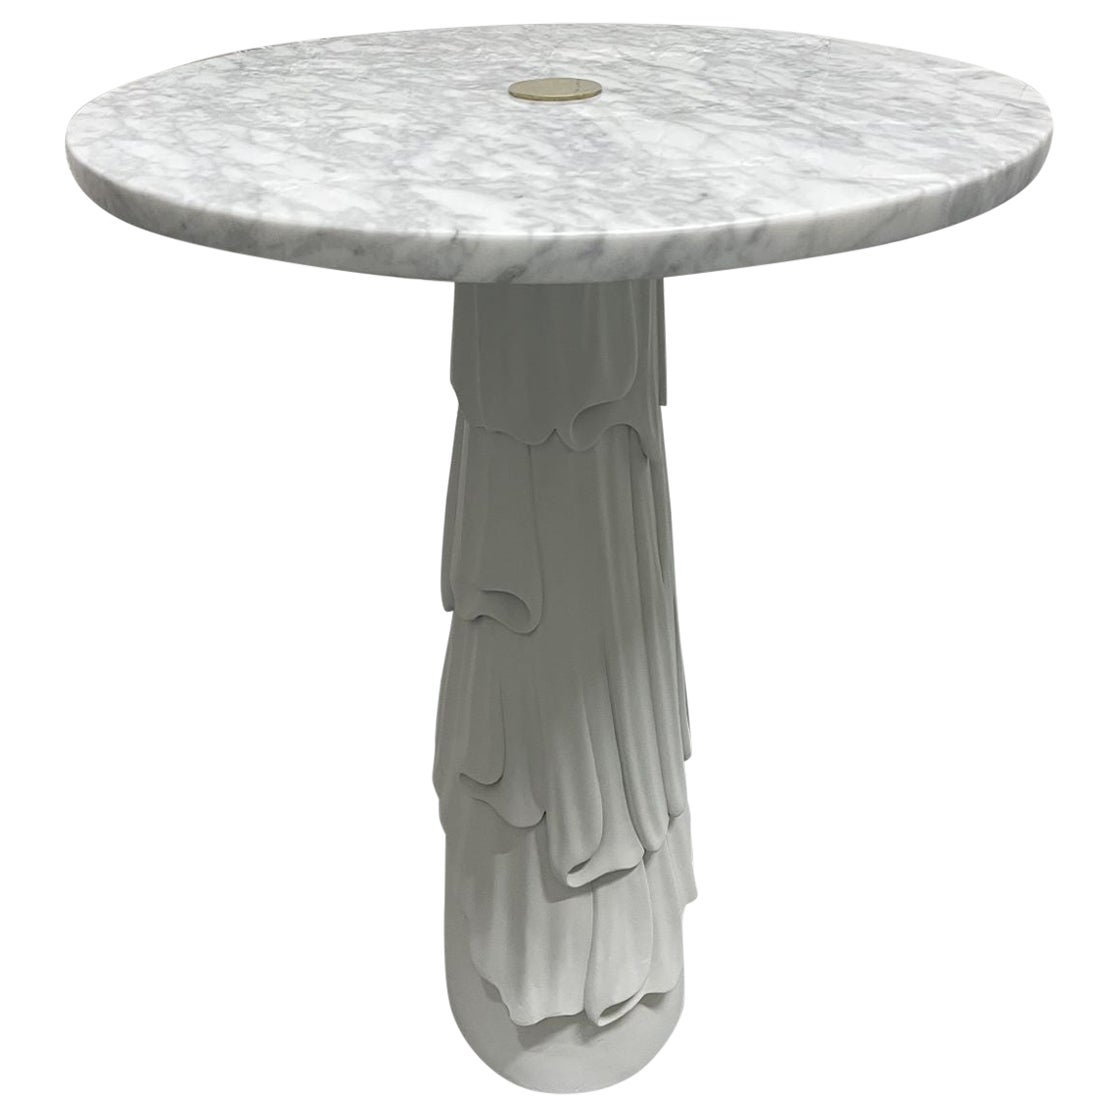 Decorative Carrara Marble Top Hollywood Regency Side Table